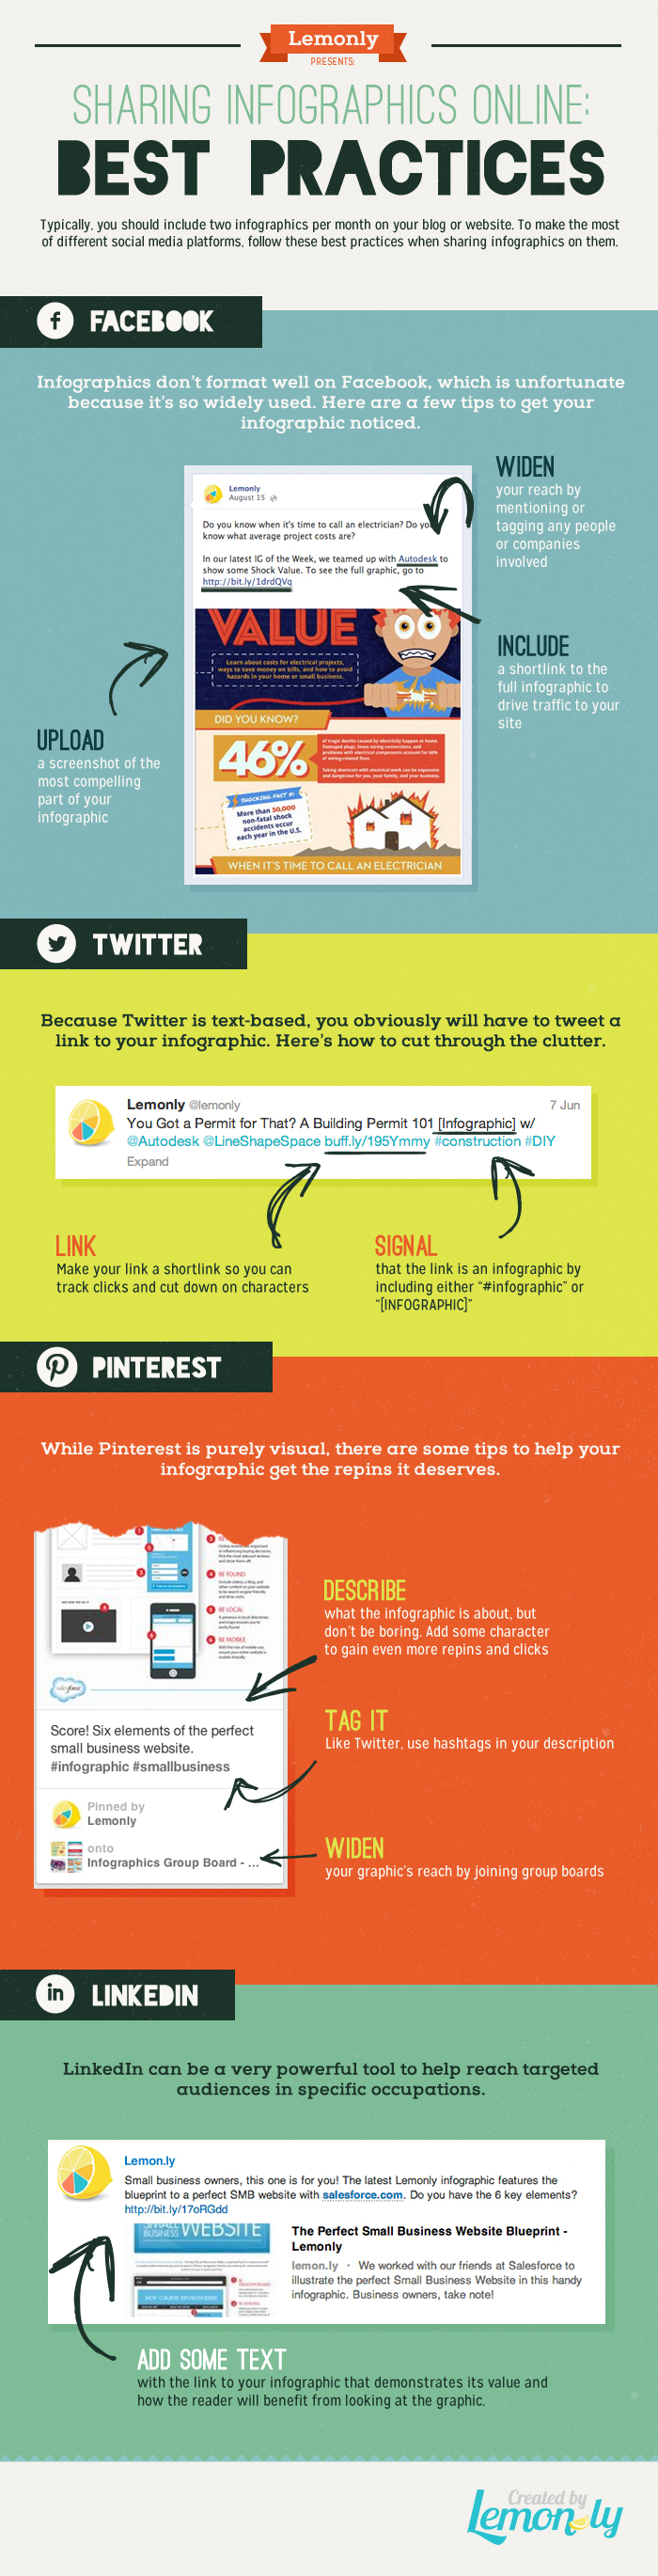 Tips for Sharing Infographics on Facebook, Twitter, Pinterest and Linkedin